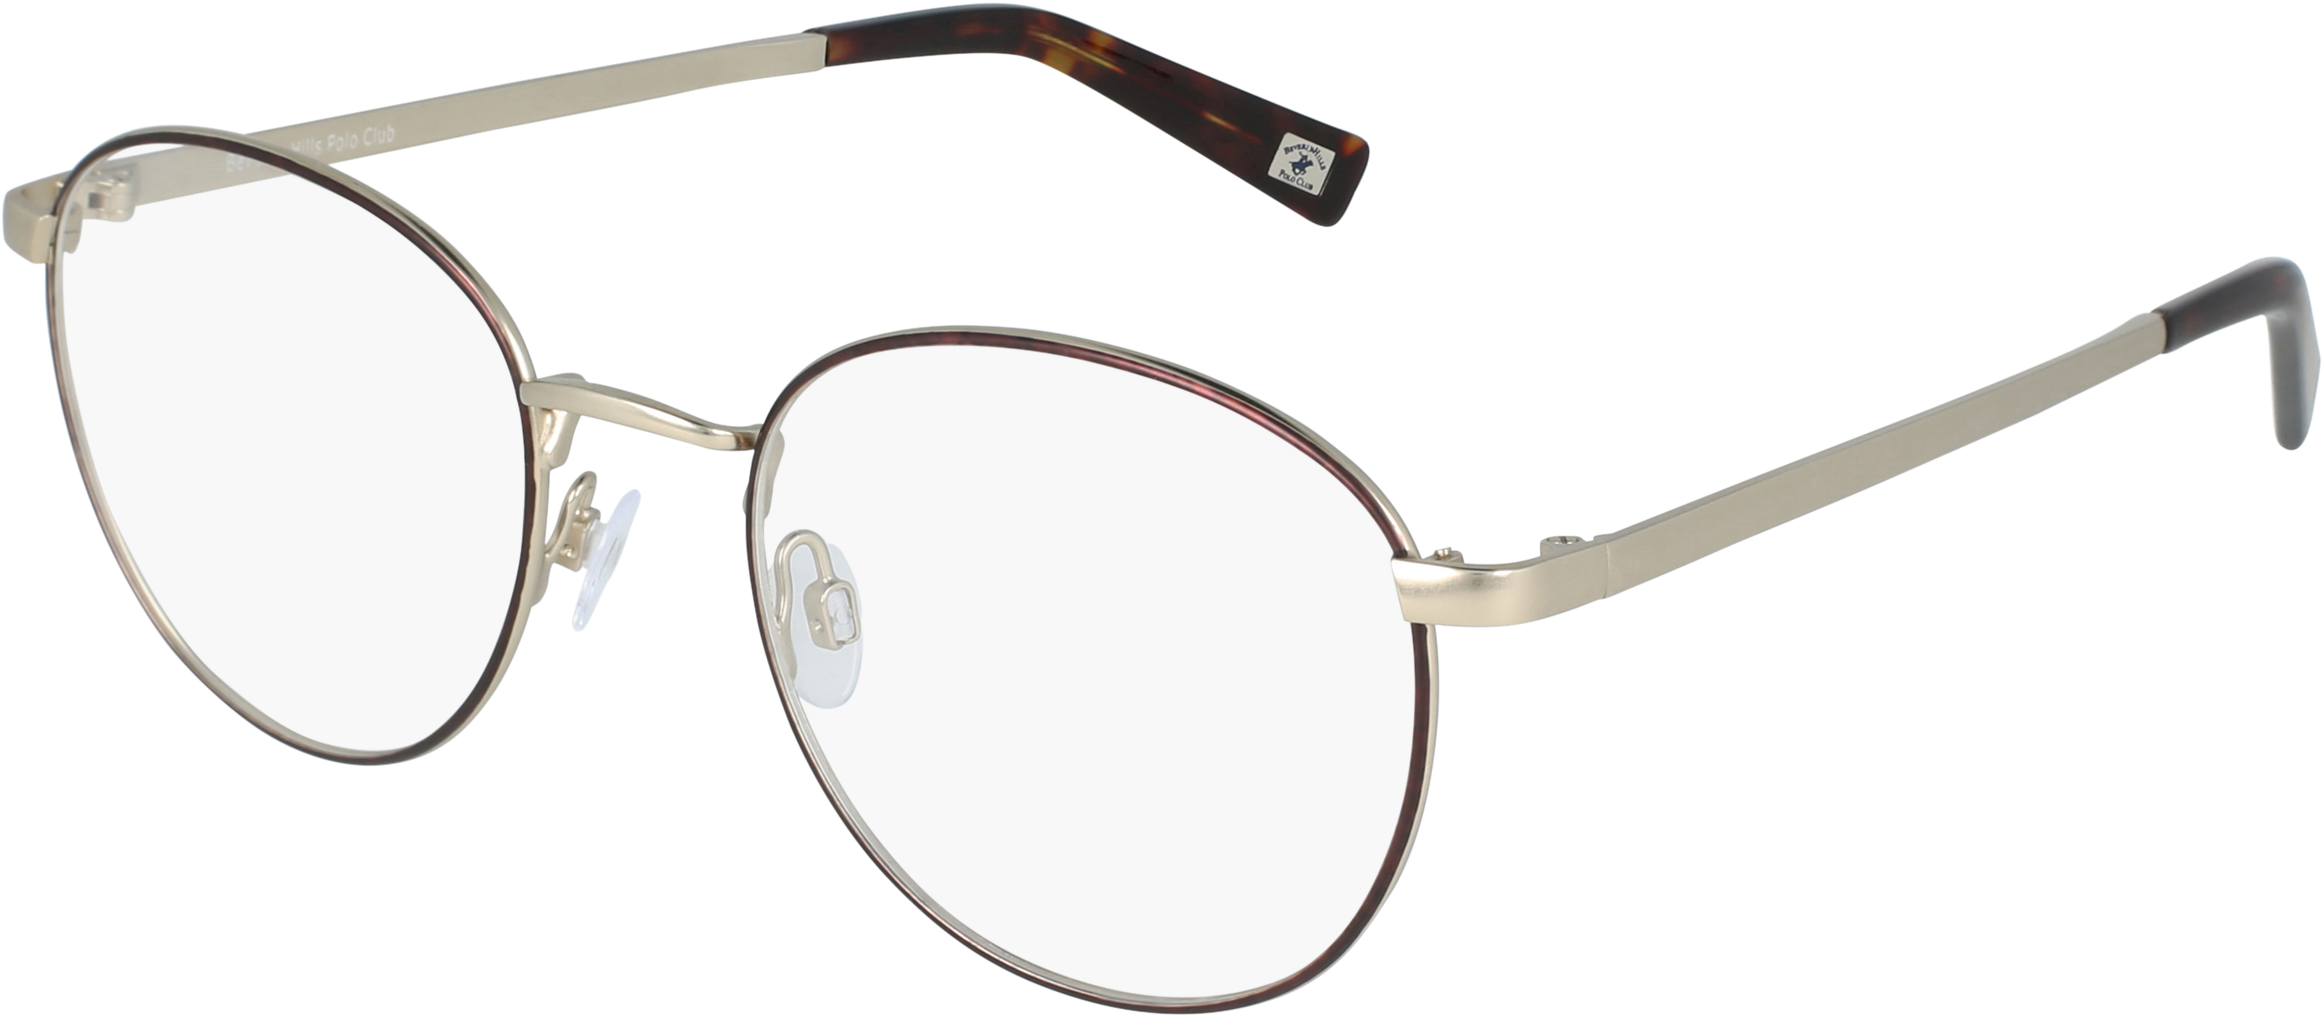 Elegant Round Eyeglasses Transparent Background